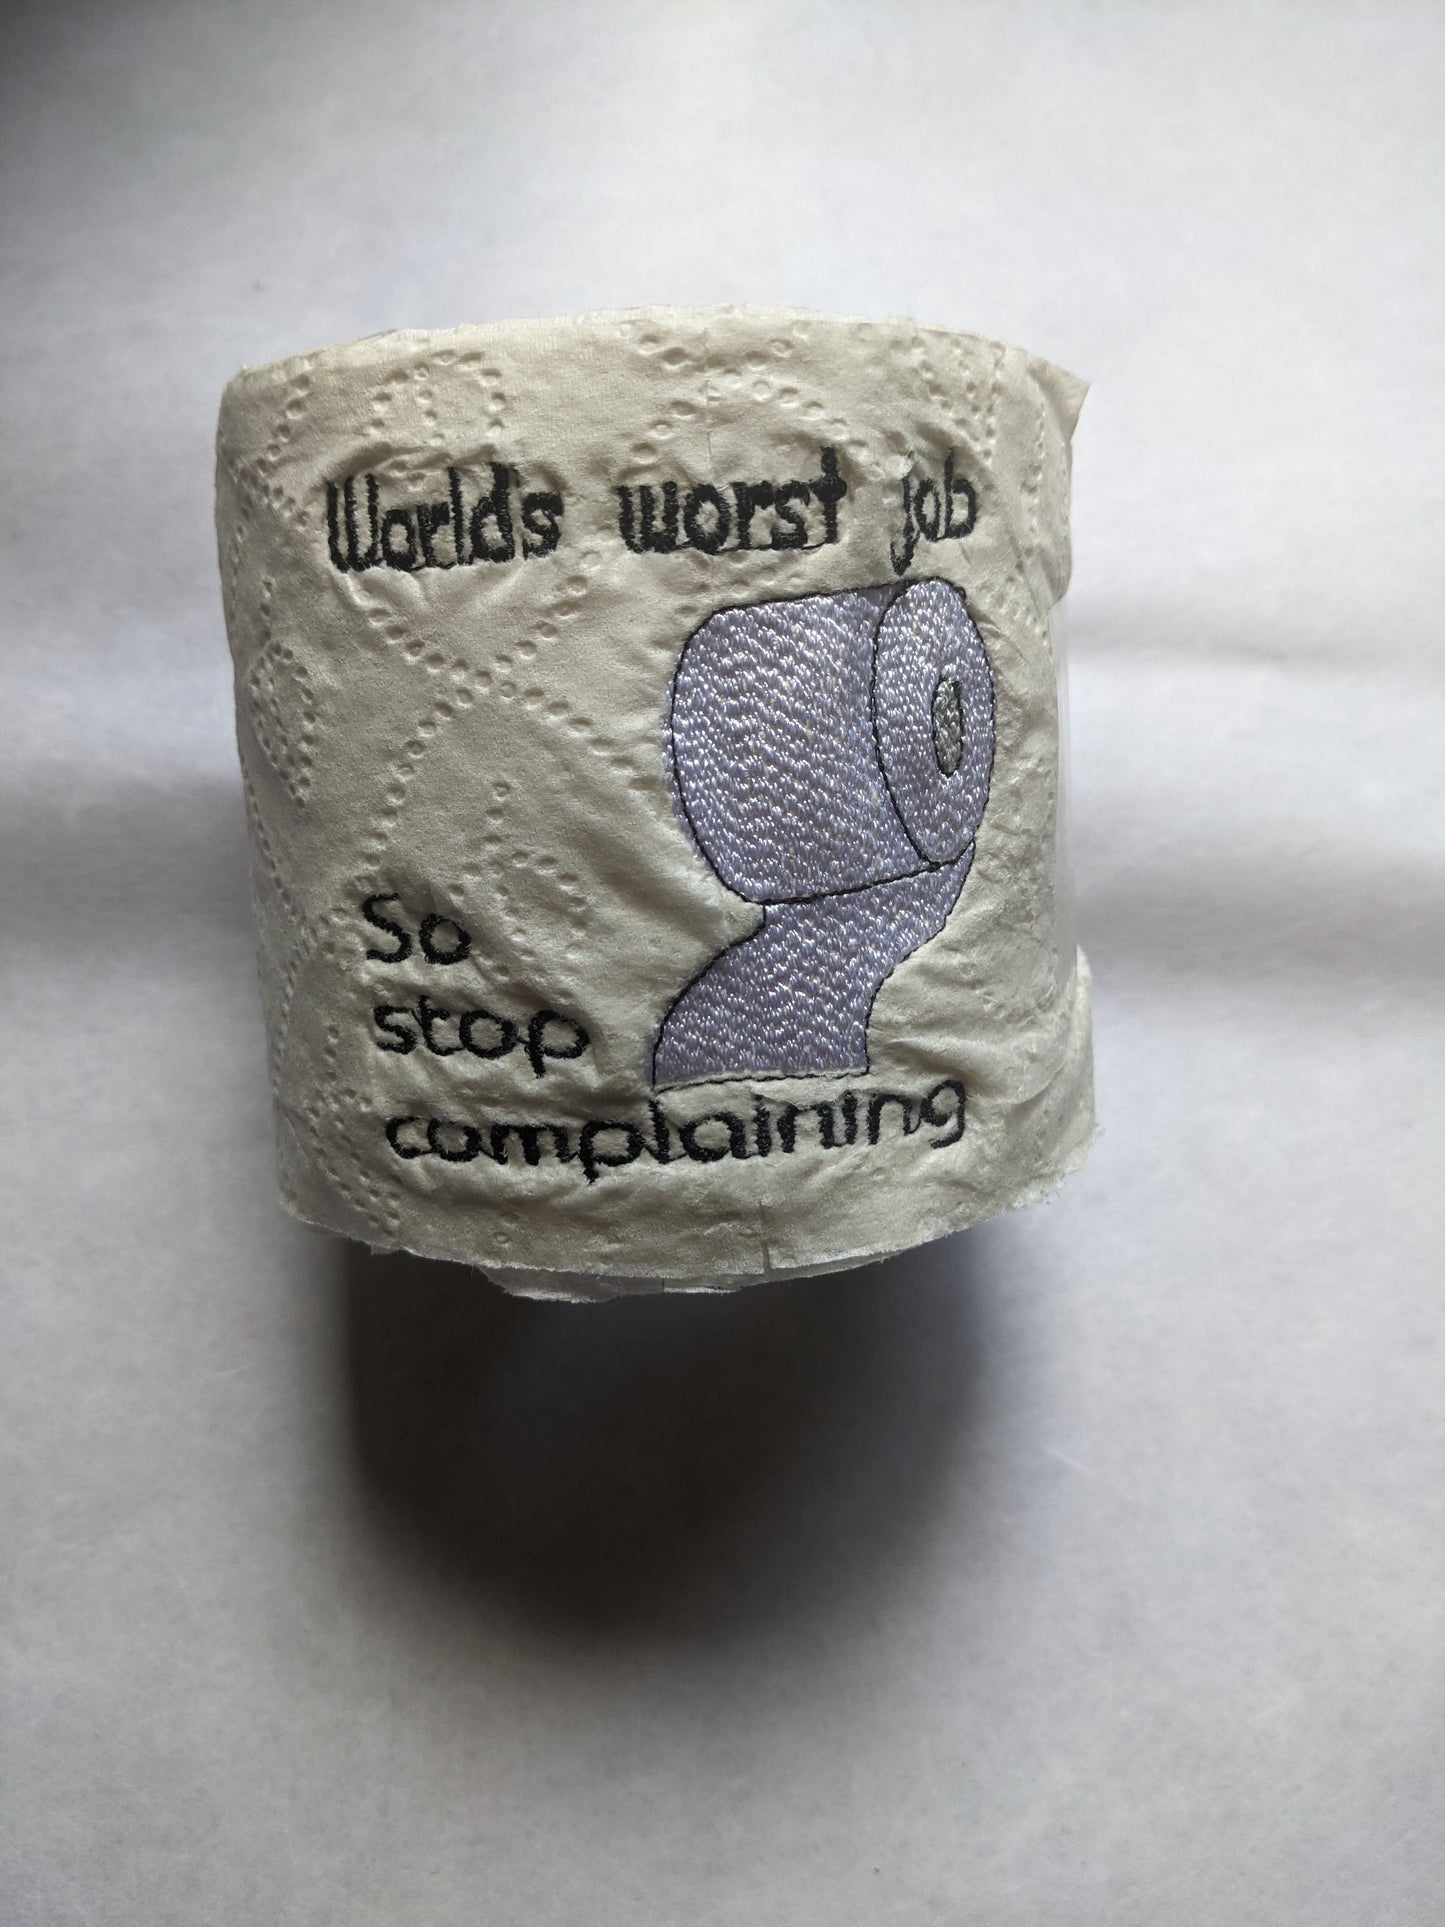 Toilet Paper Roll - Worlds Worst Job  Custom Made